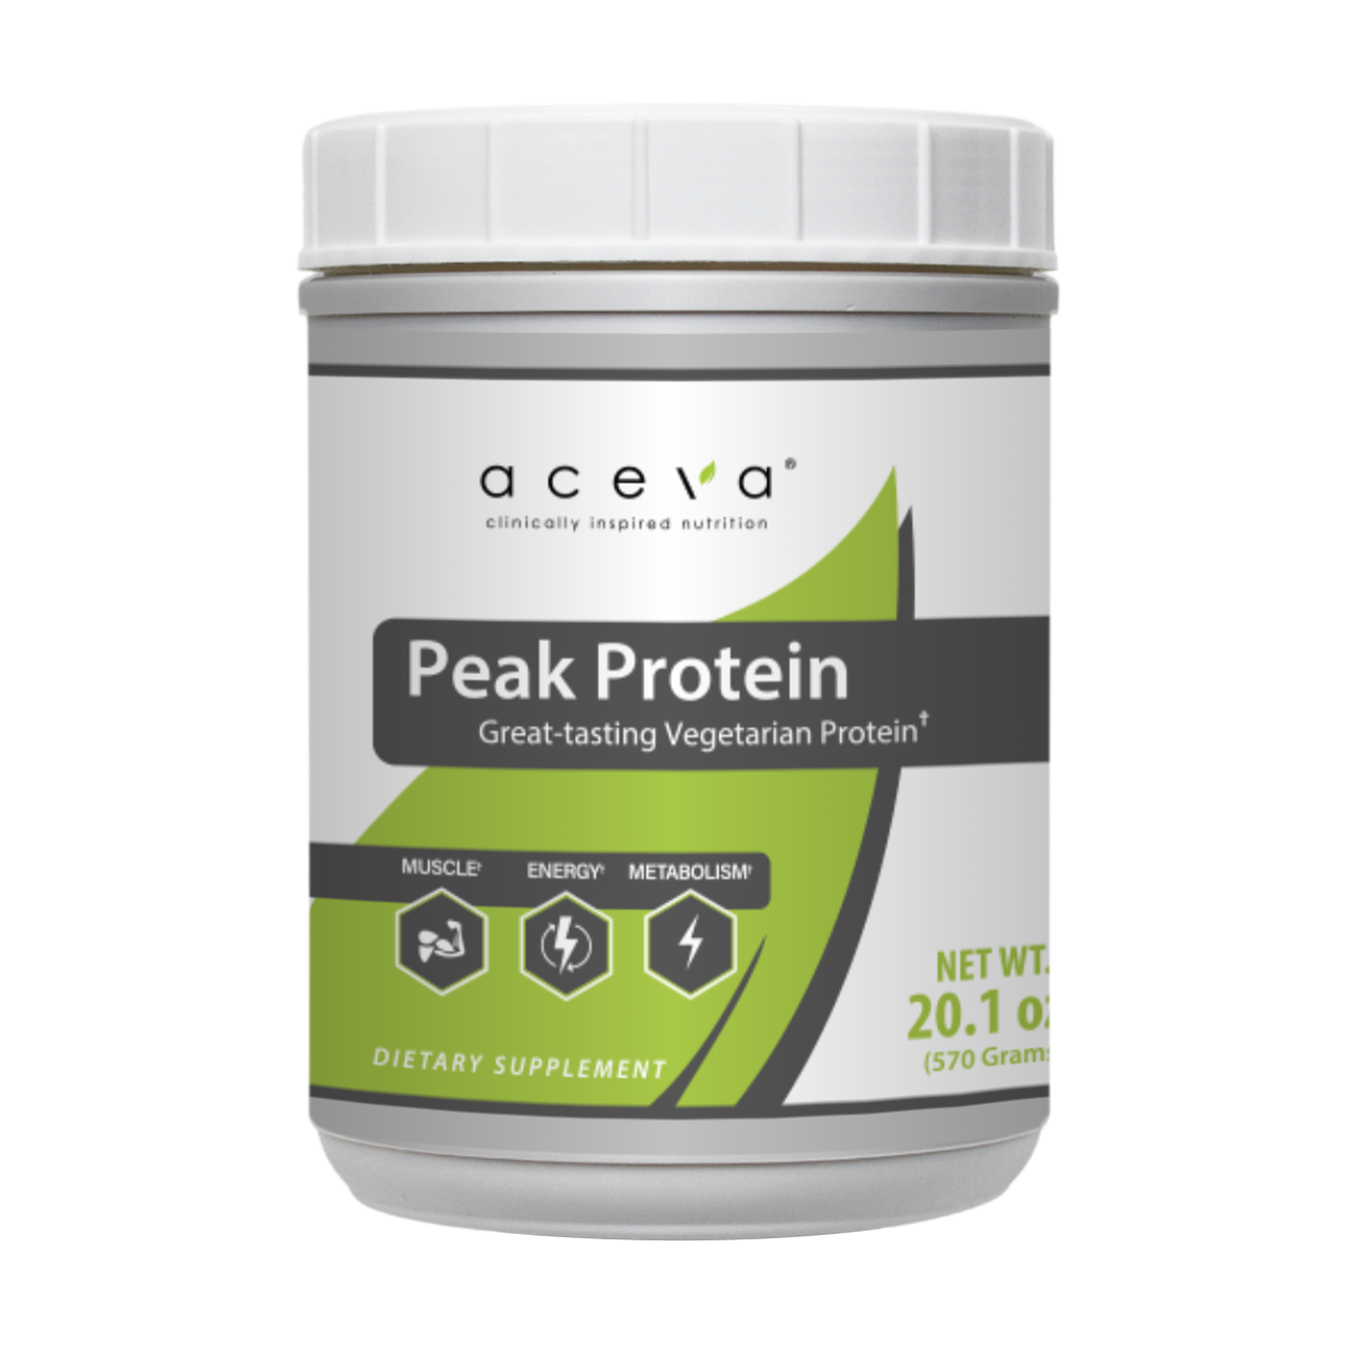 Peak Protein